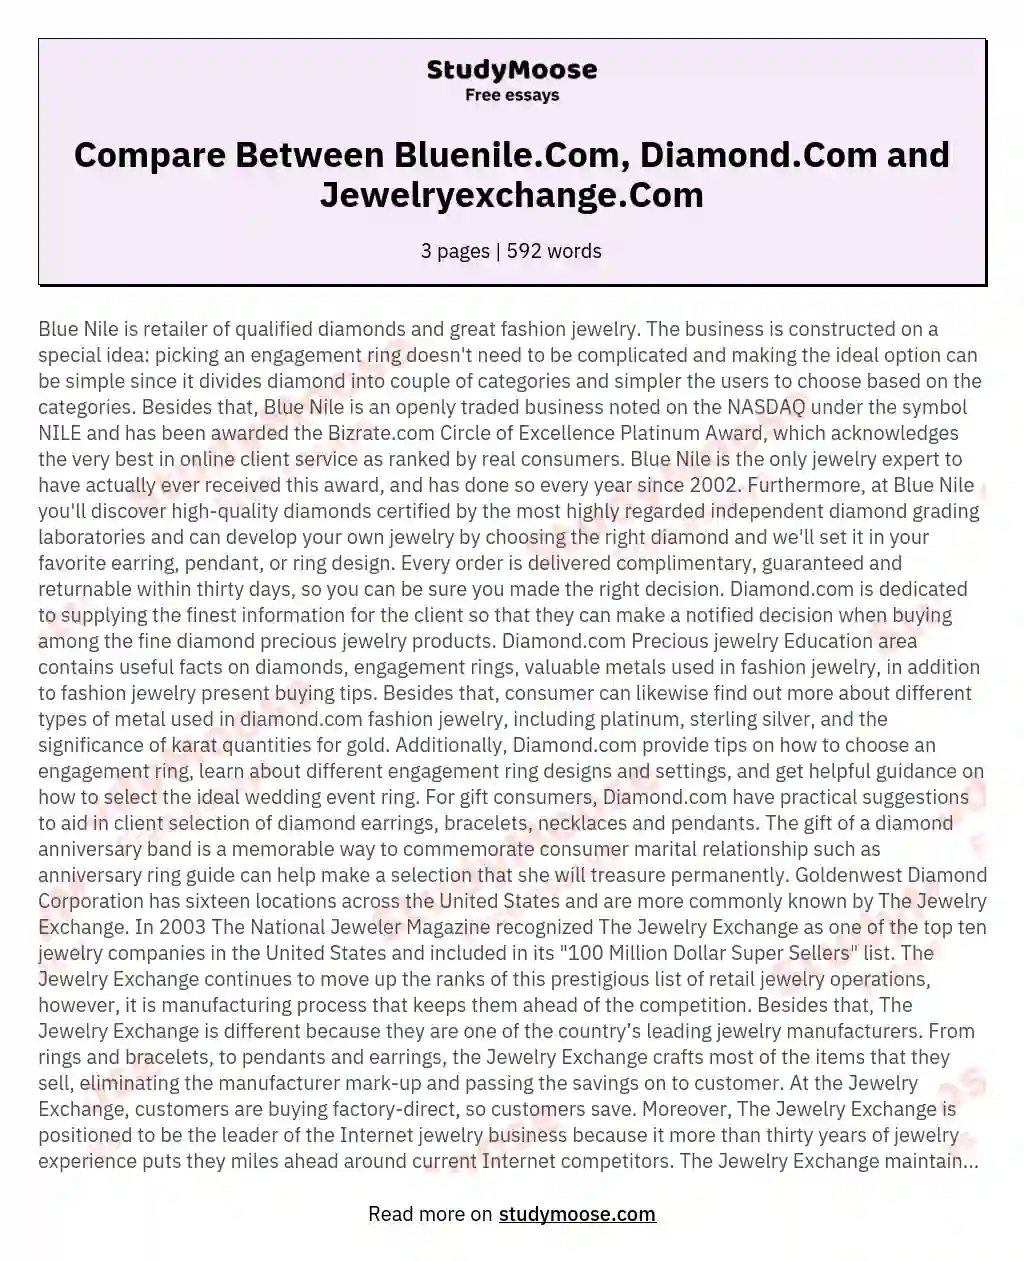 Compare Between Bluenile.Com, Diamond.Com and Jewelryexchange.Com essay